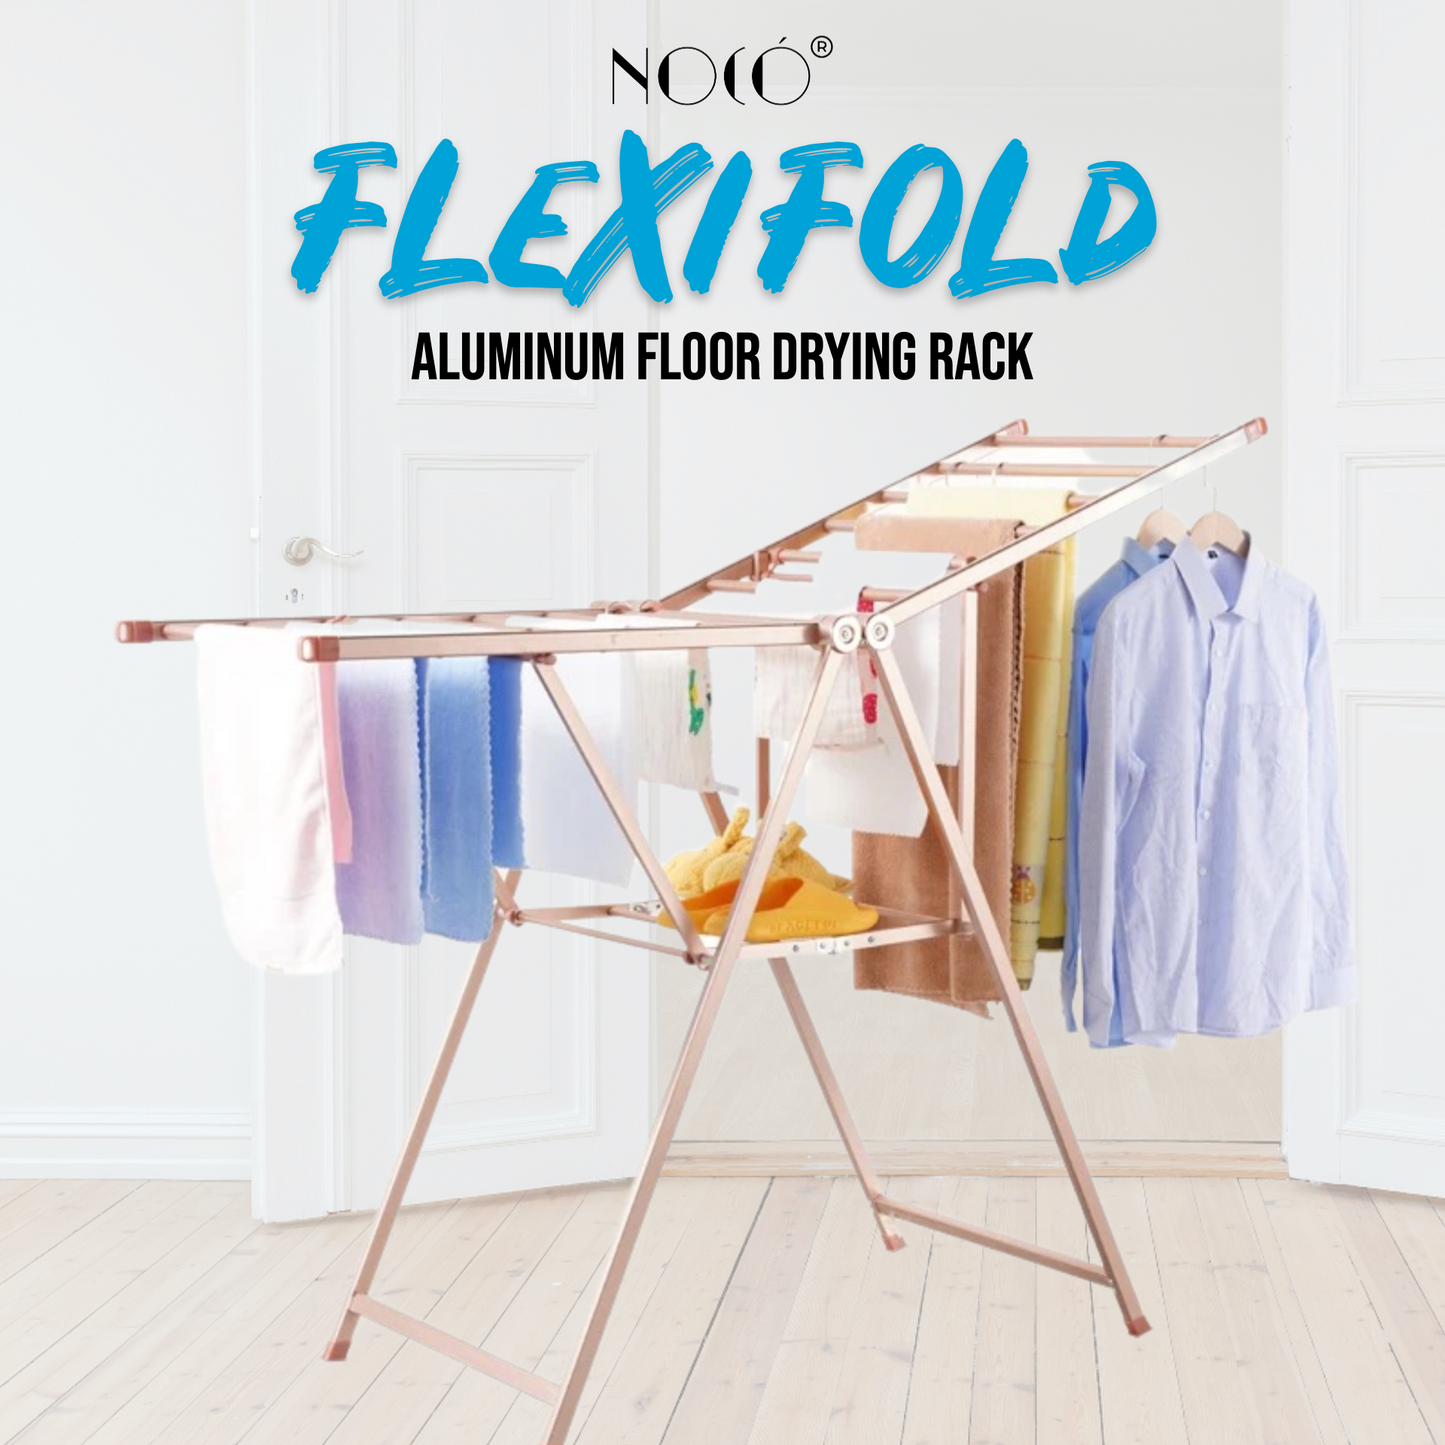 FlexiFold™ Aluminum Drying Rack